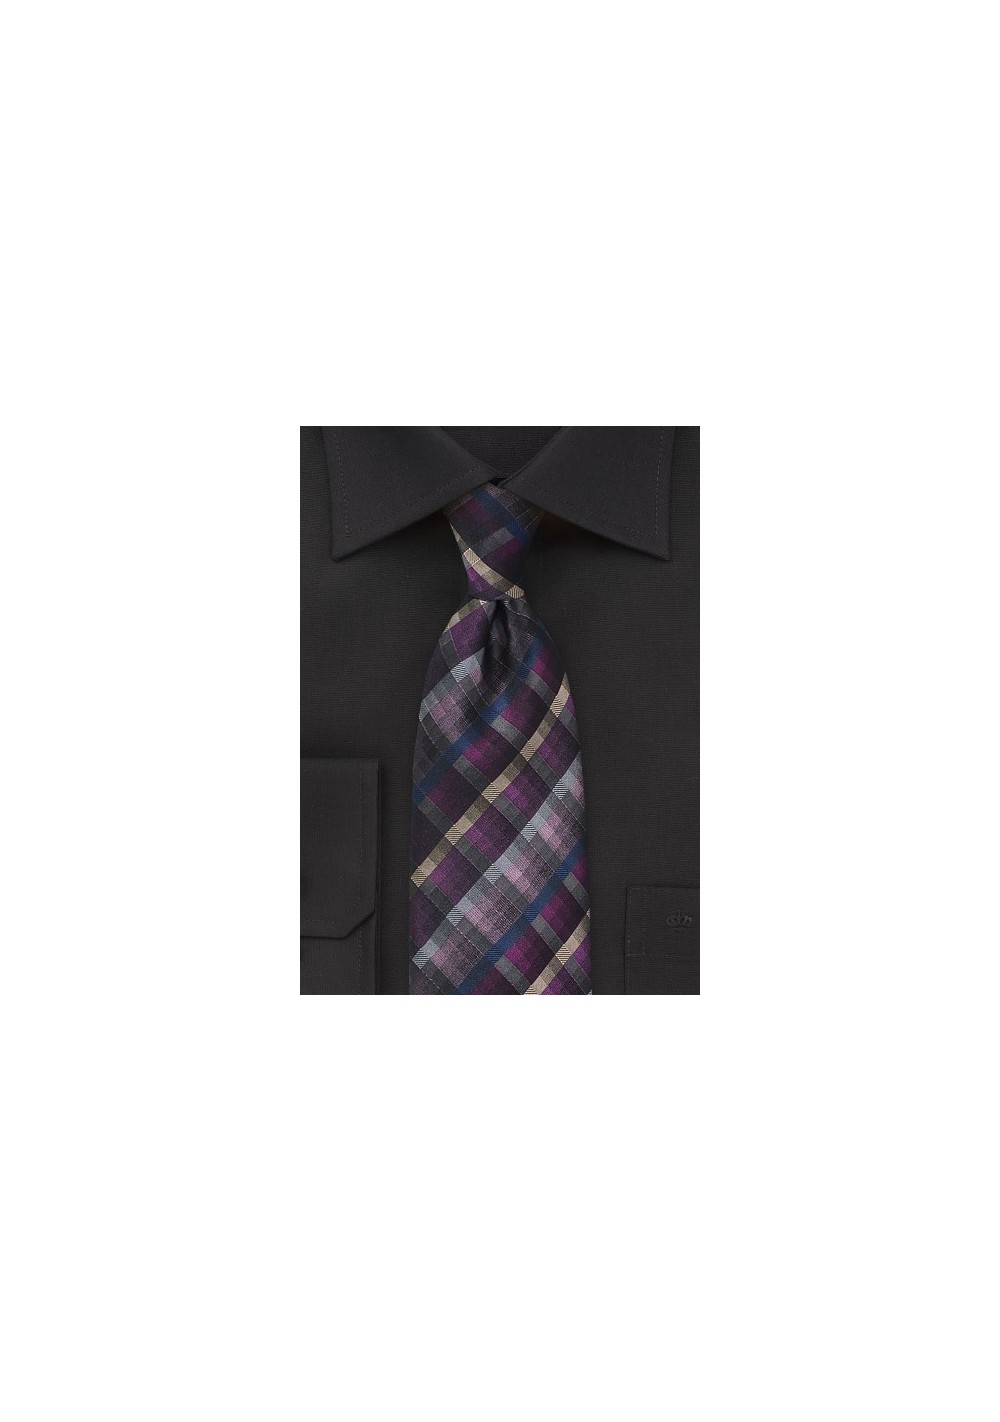 Purple, Pink, Gray Checkered Tie